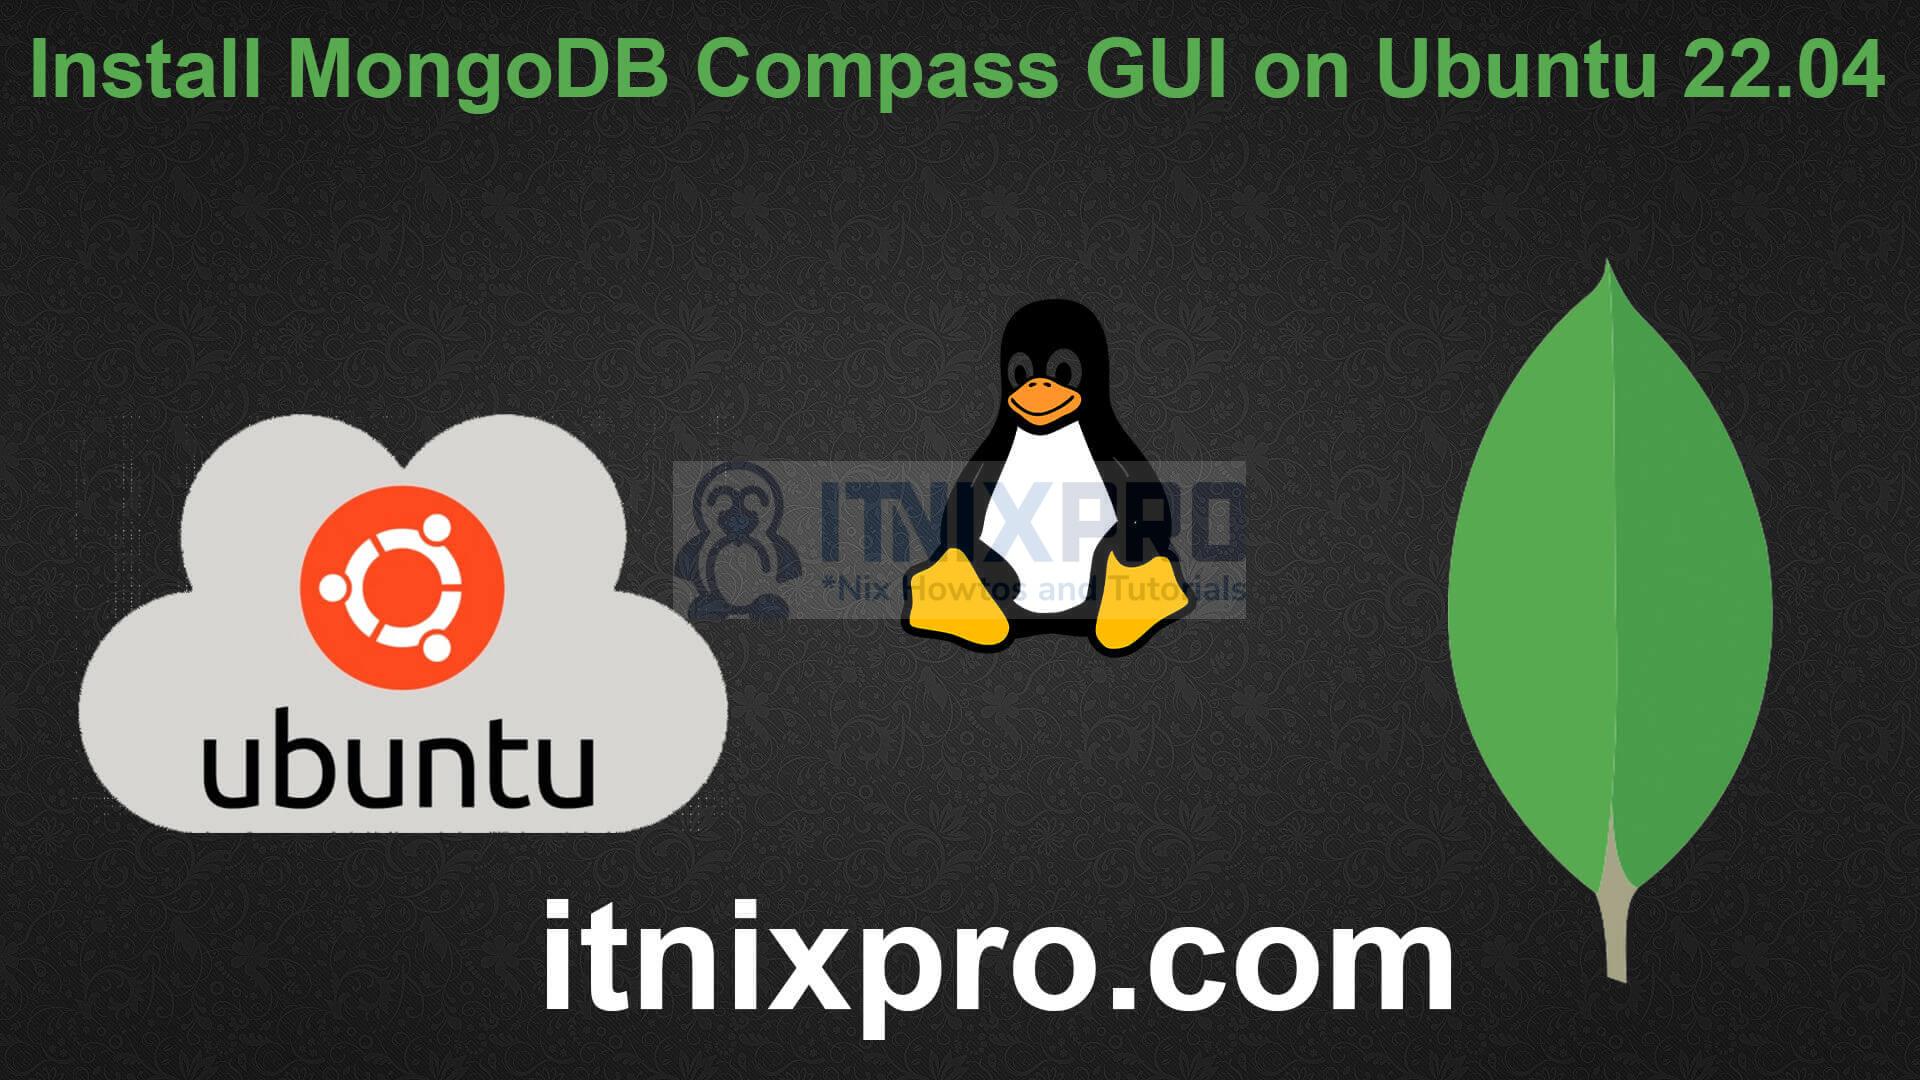 Install MongoDB compass GUI on Ubuntu 22.04